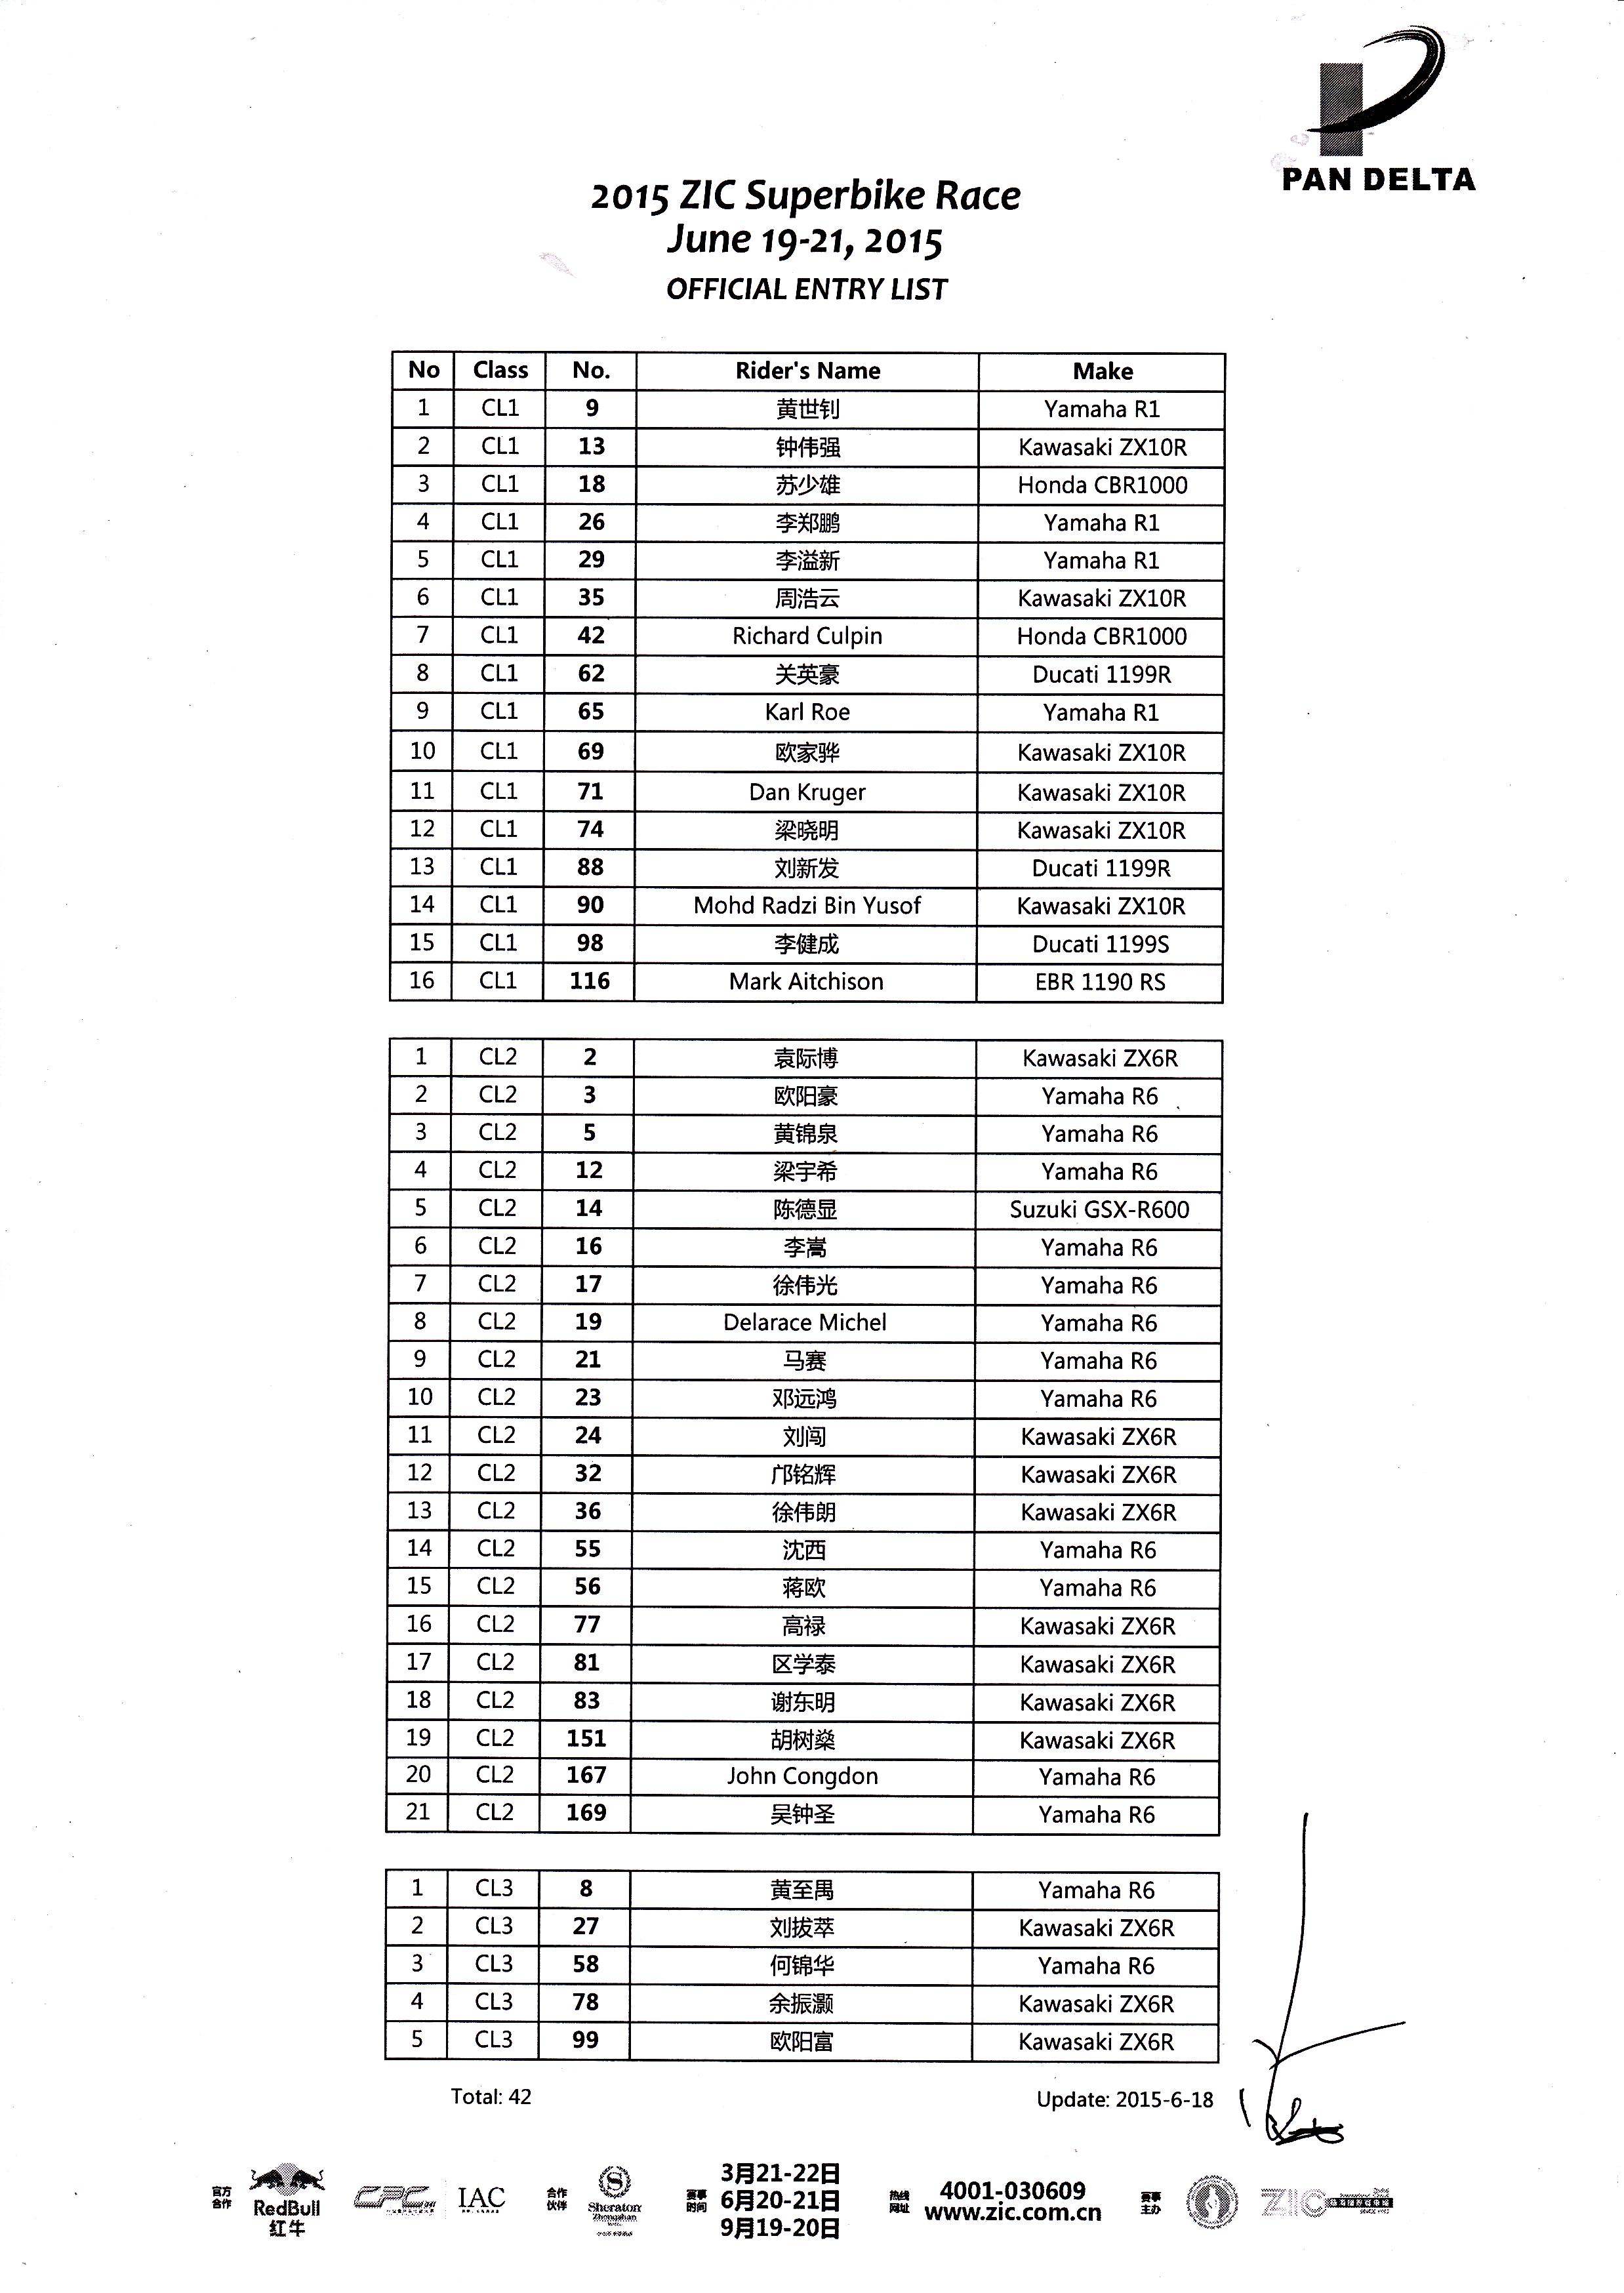 2015 Pan Delta Spring ZIC Superbike Entry List